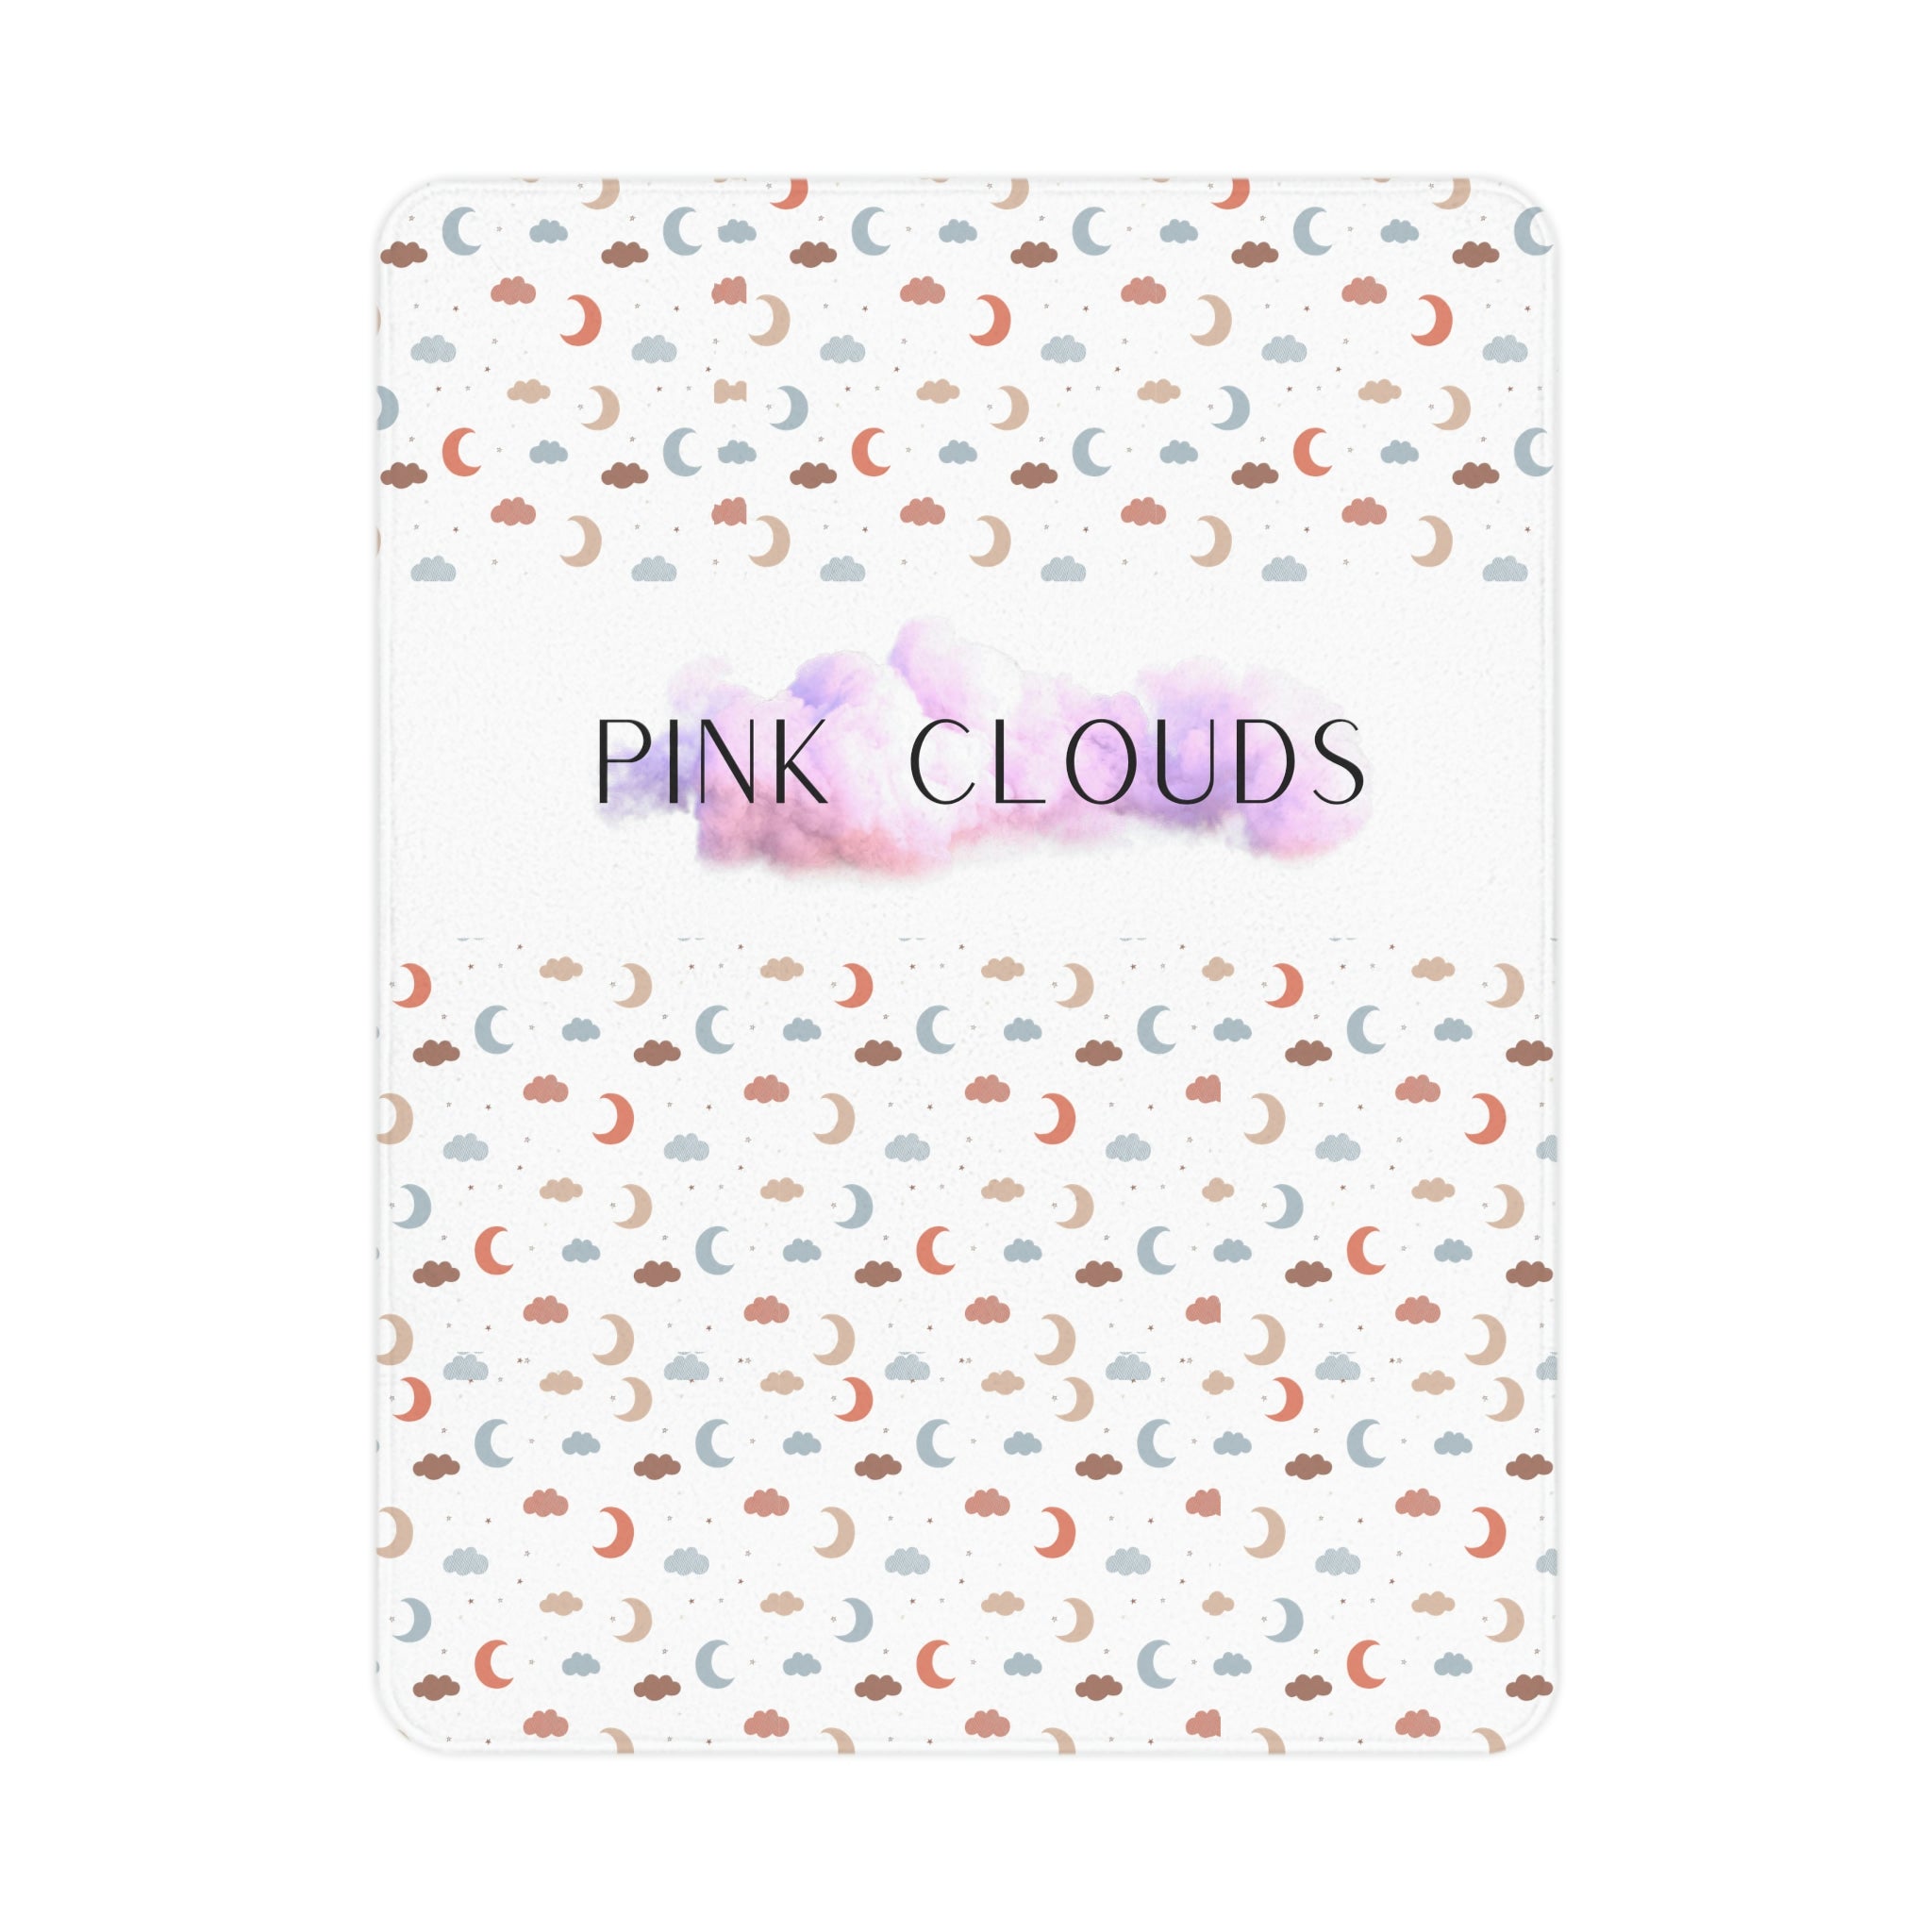 Pink Clouds - Toddler Blanket